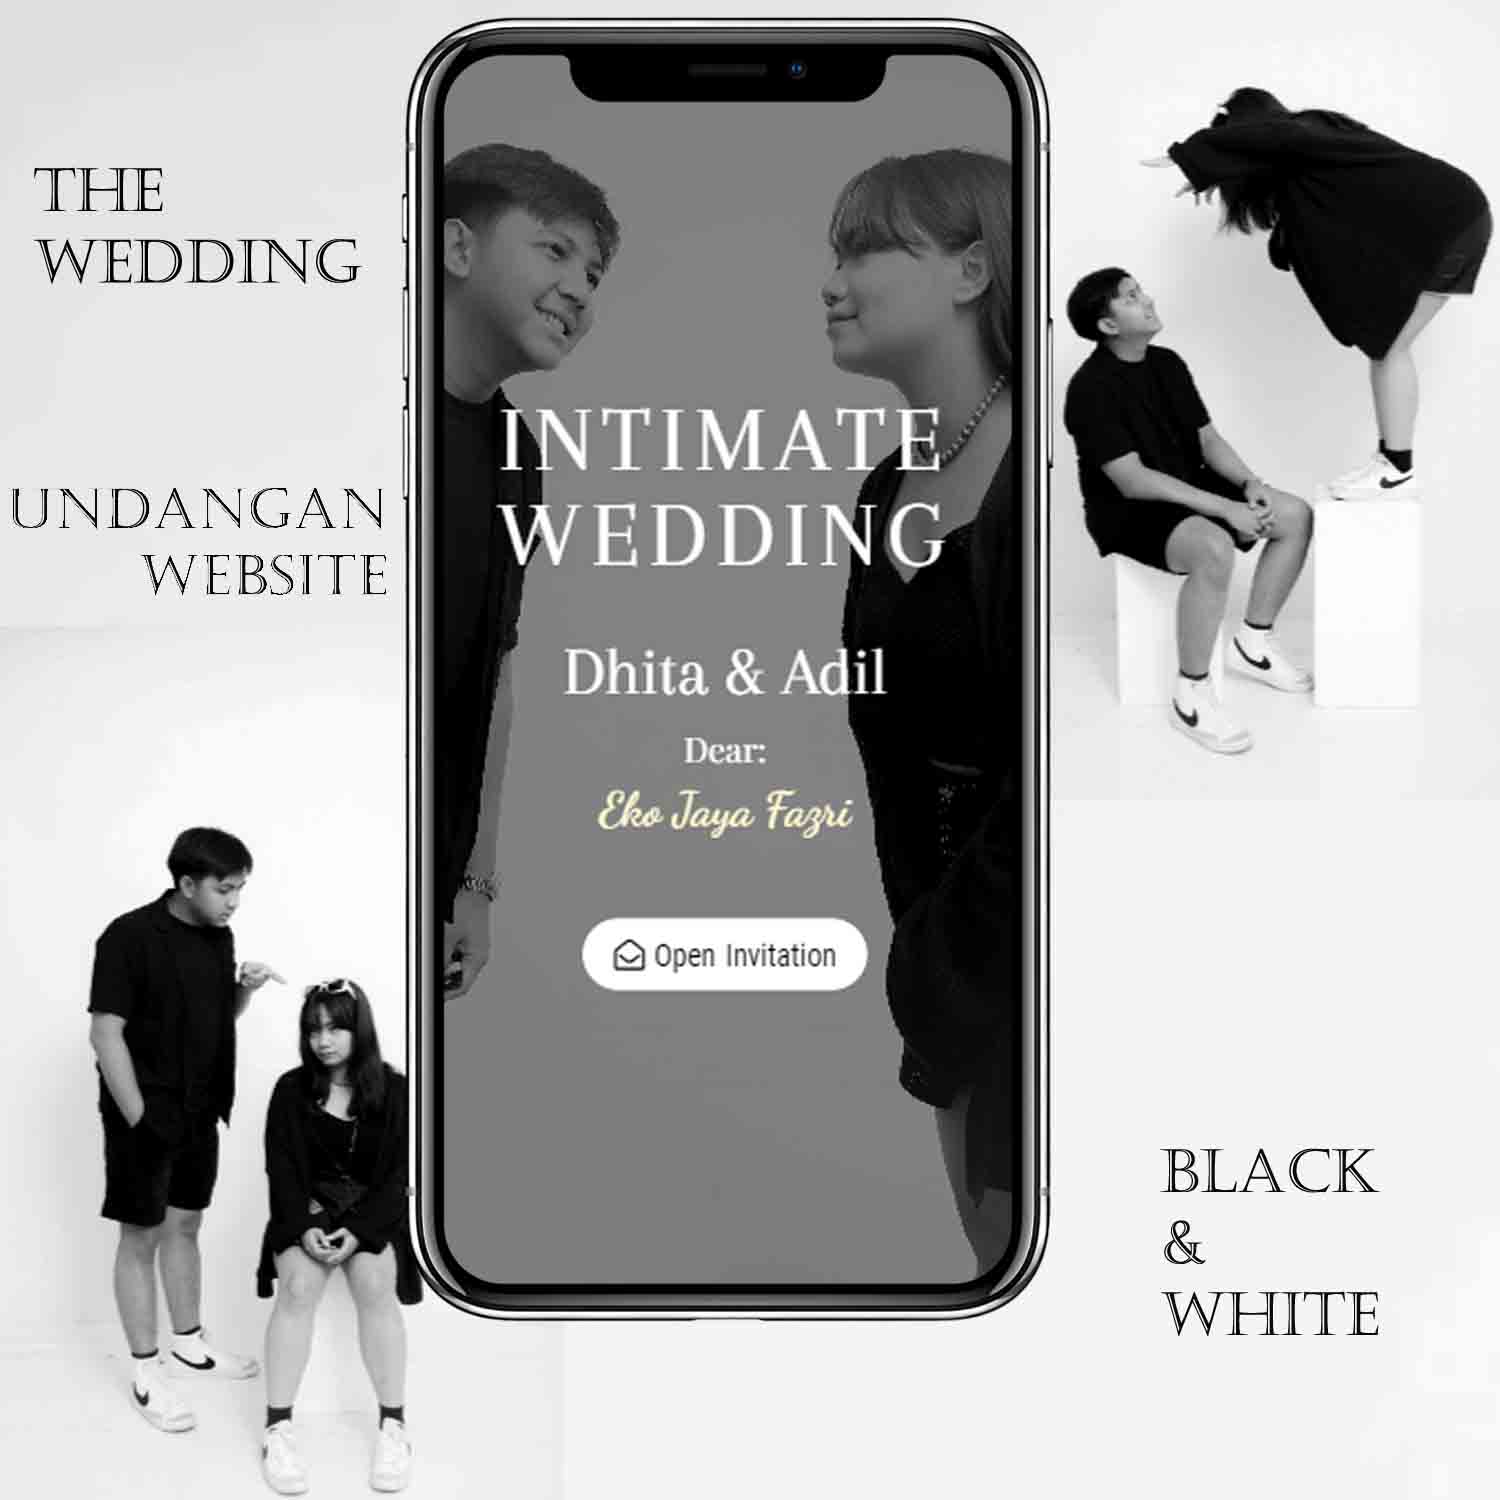 Undangan Digital Pernikahan